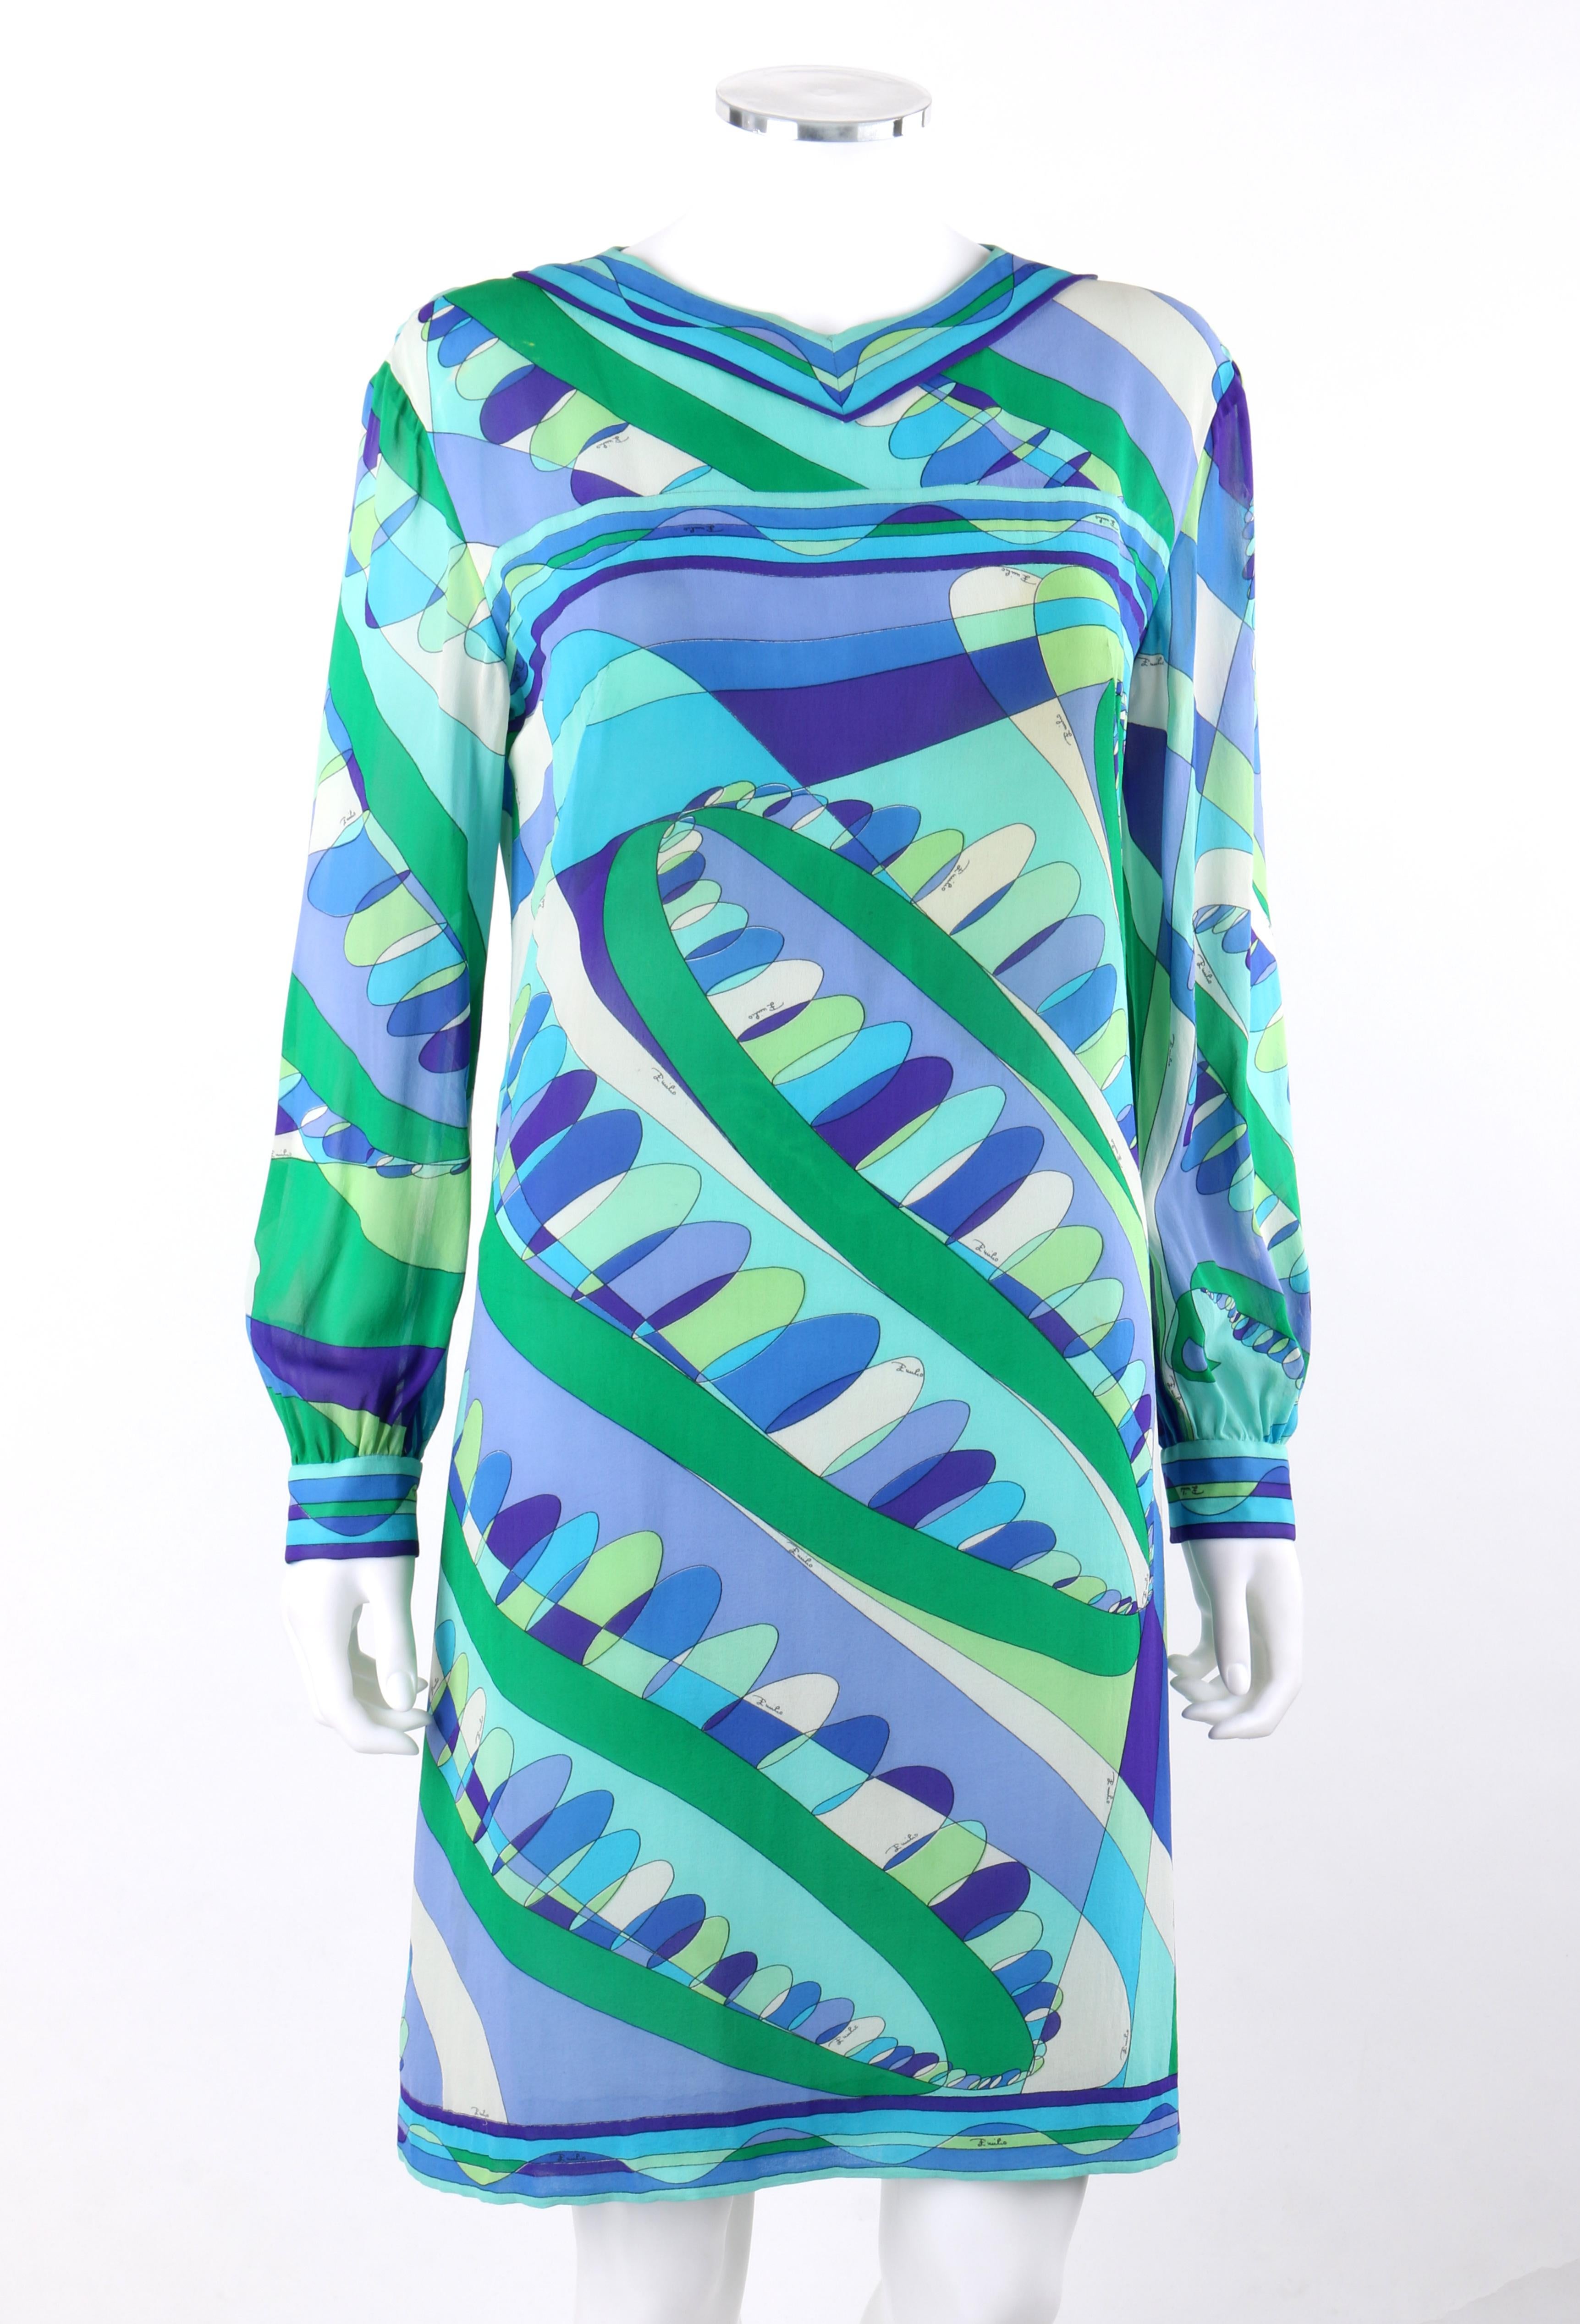 EMILIO PUCCI c.1960’s Blue Multi-Color Op Art Signature Print Sheath Dress
 
Circa: 1960’s 
Label(s): Emilio Pucci   
Style: Sheath Dress
Color(s): Shades of blue, green, off-white, black. 
Lined: No
Marked Fabric Content: 100% Silk 
Additional